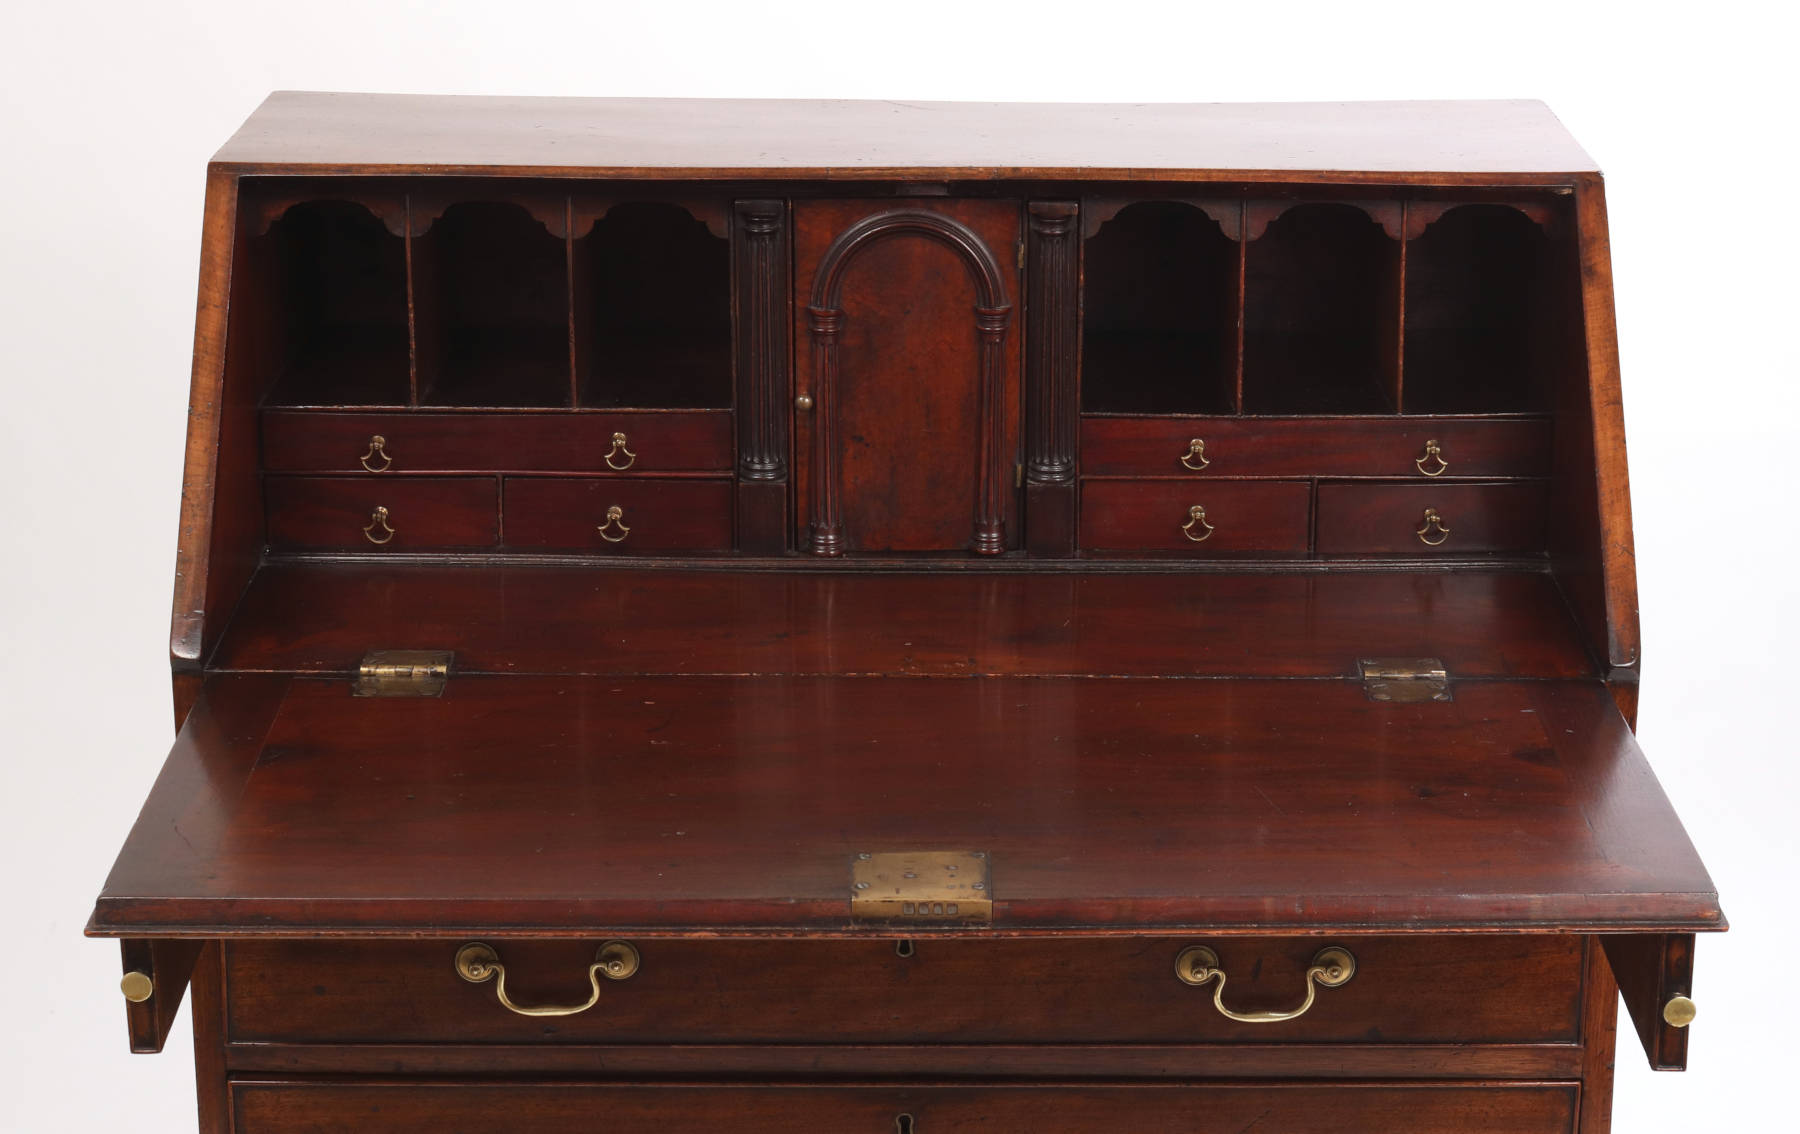 George III Mahogany Slant Front Desk, c. 1760-70